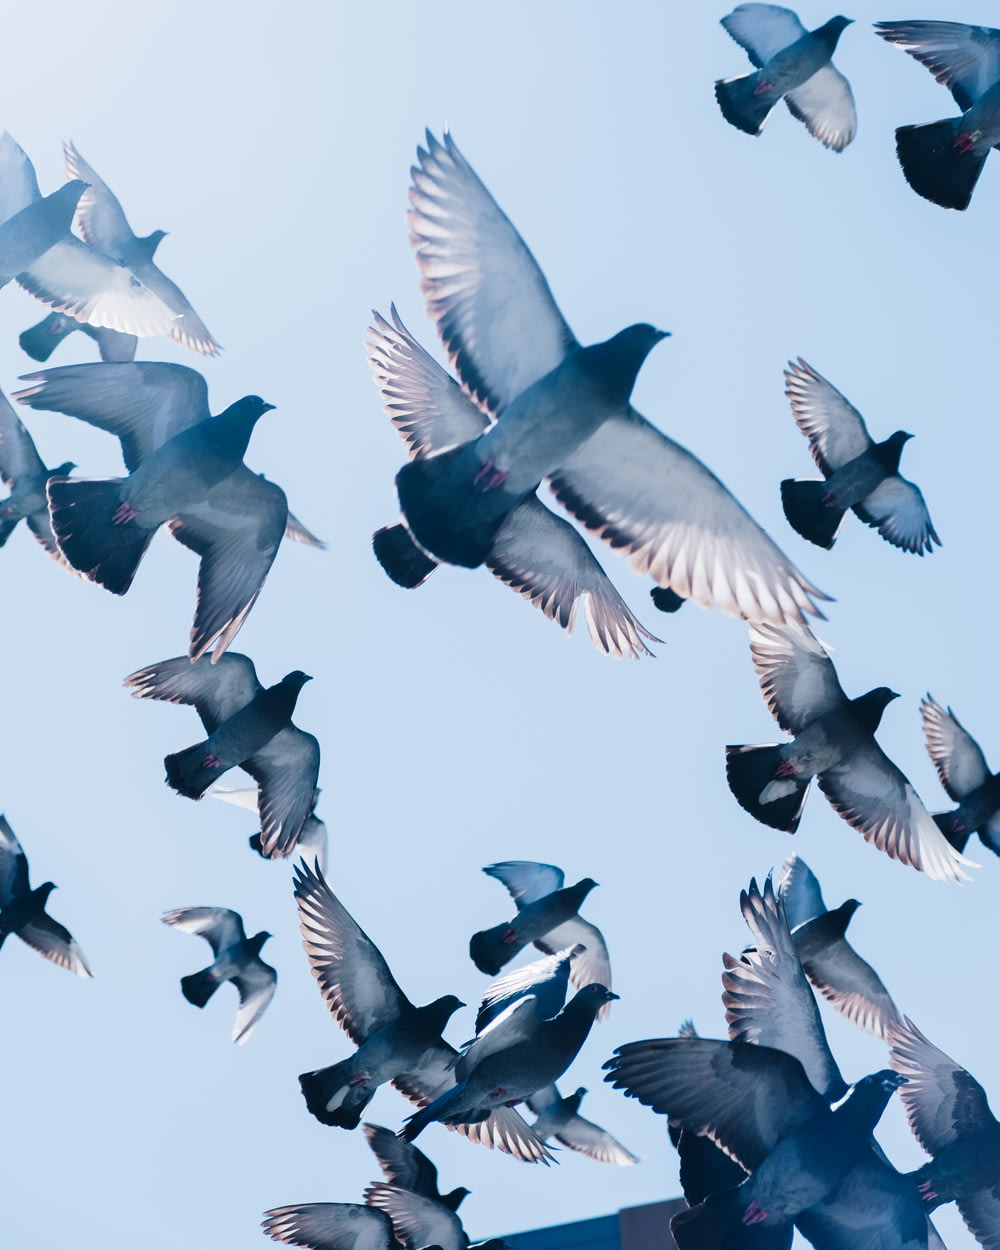 pombos cinzentos voando sob o céu azul